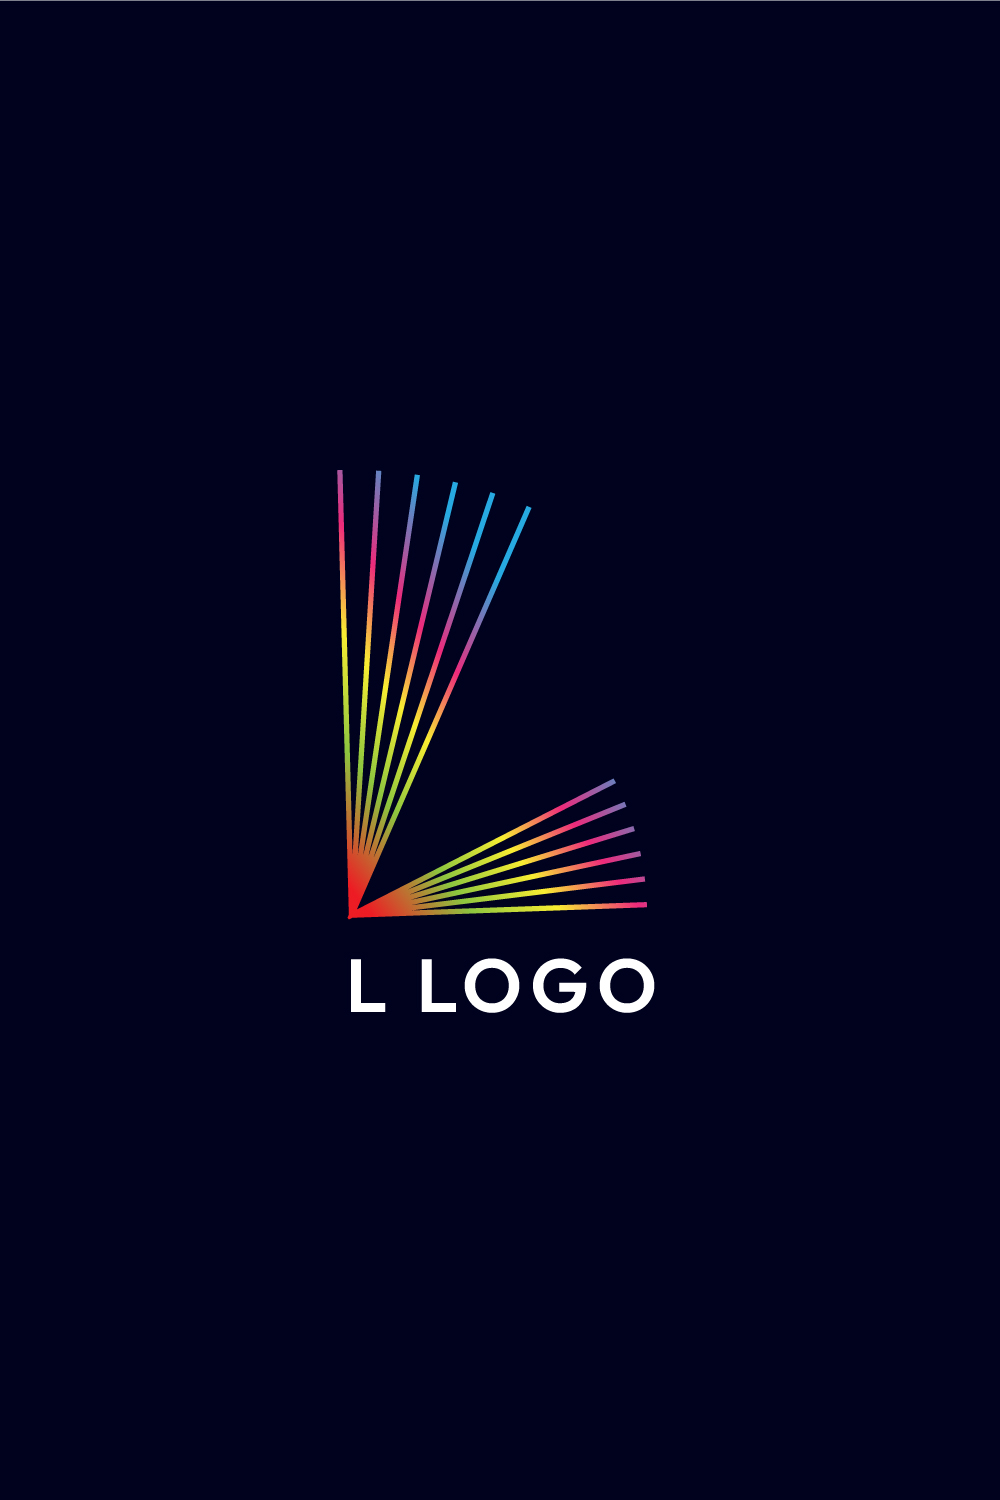 Sleek Line Art Letter L Logo Design - Professional Branding Solution pinterest preview image.